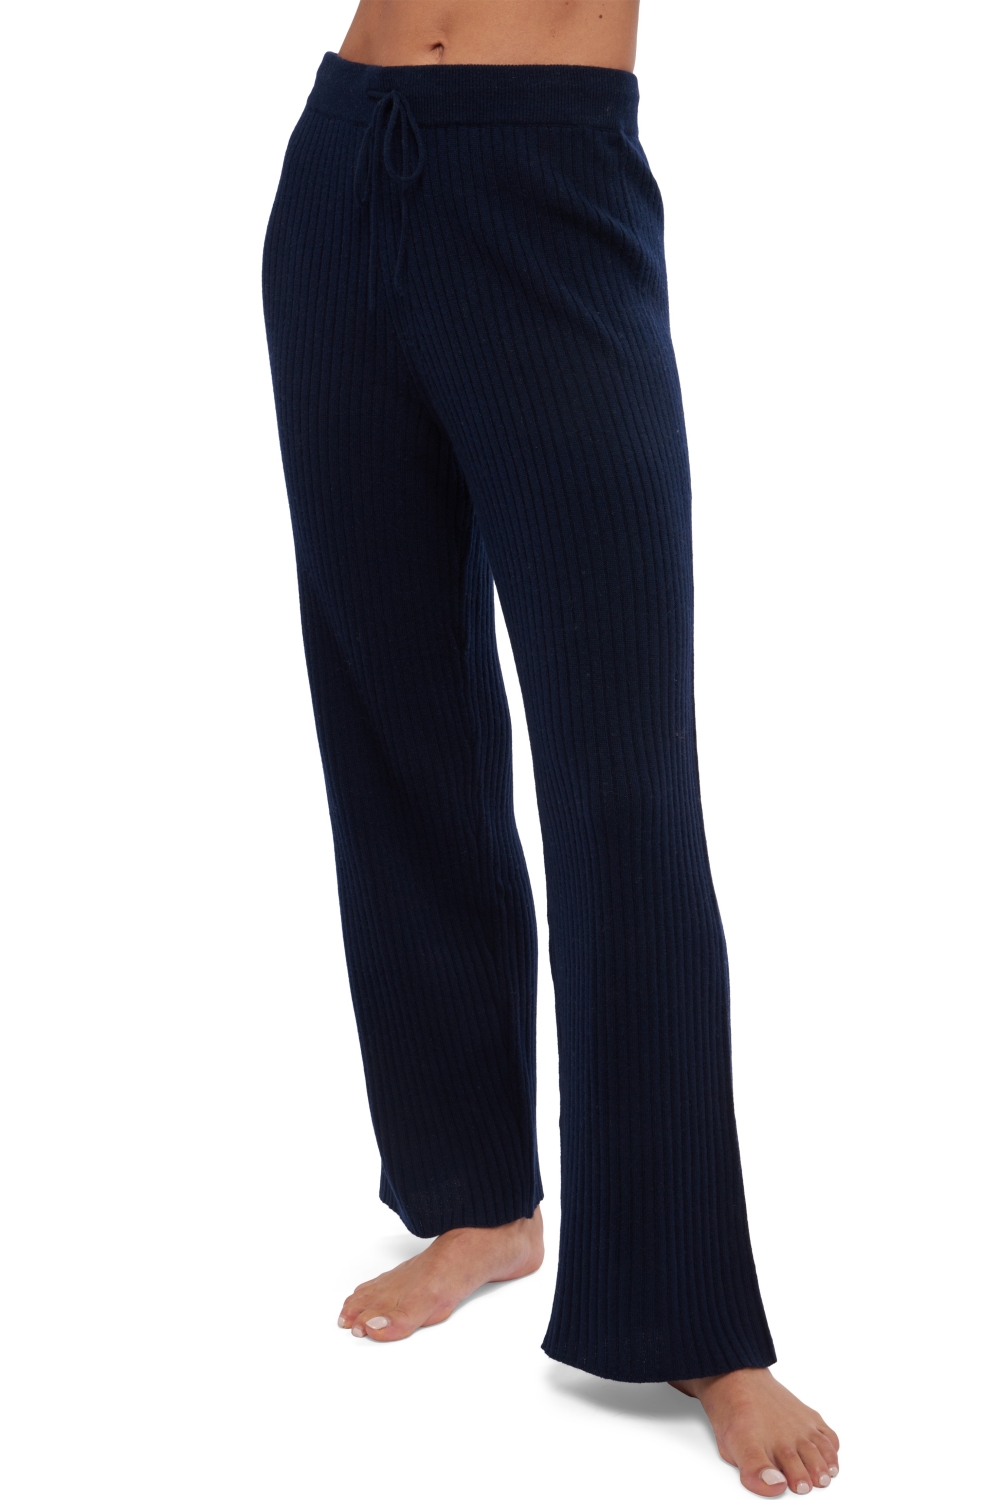 Cashmere cashmere donna pantaloni leggings avignon blu notte 2xl